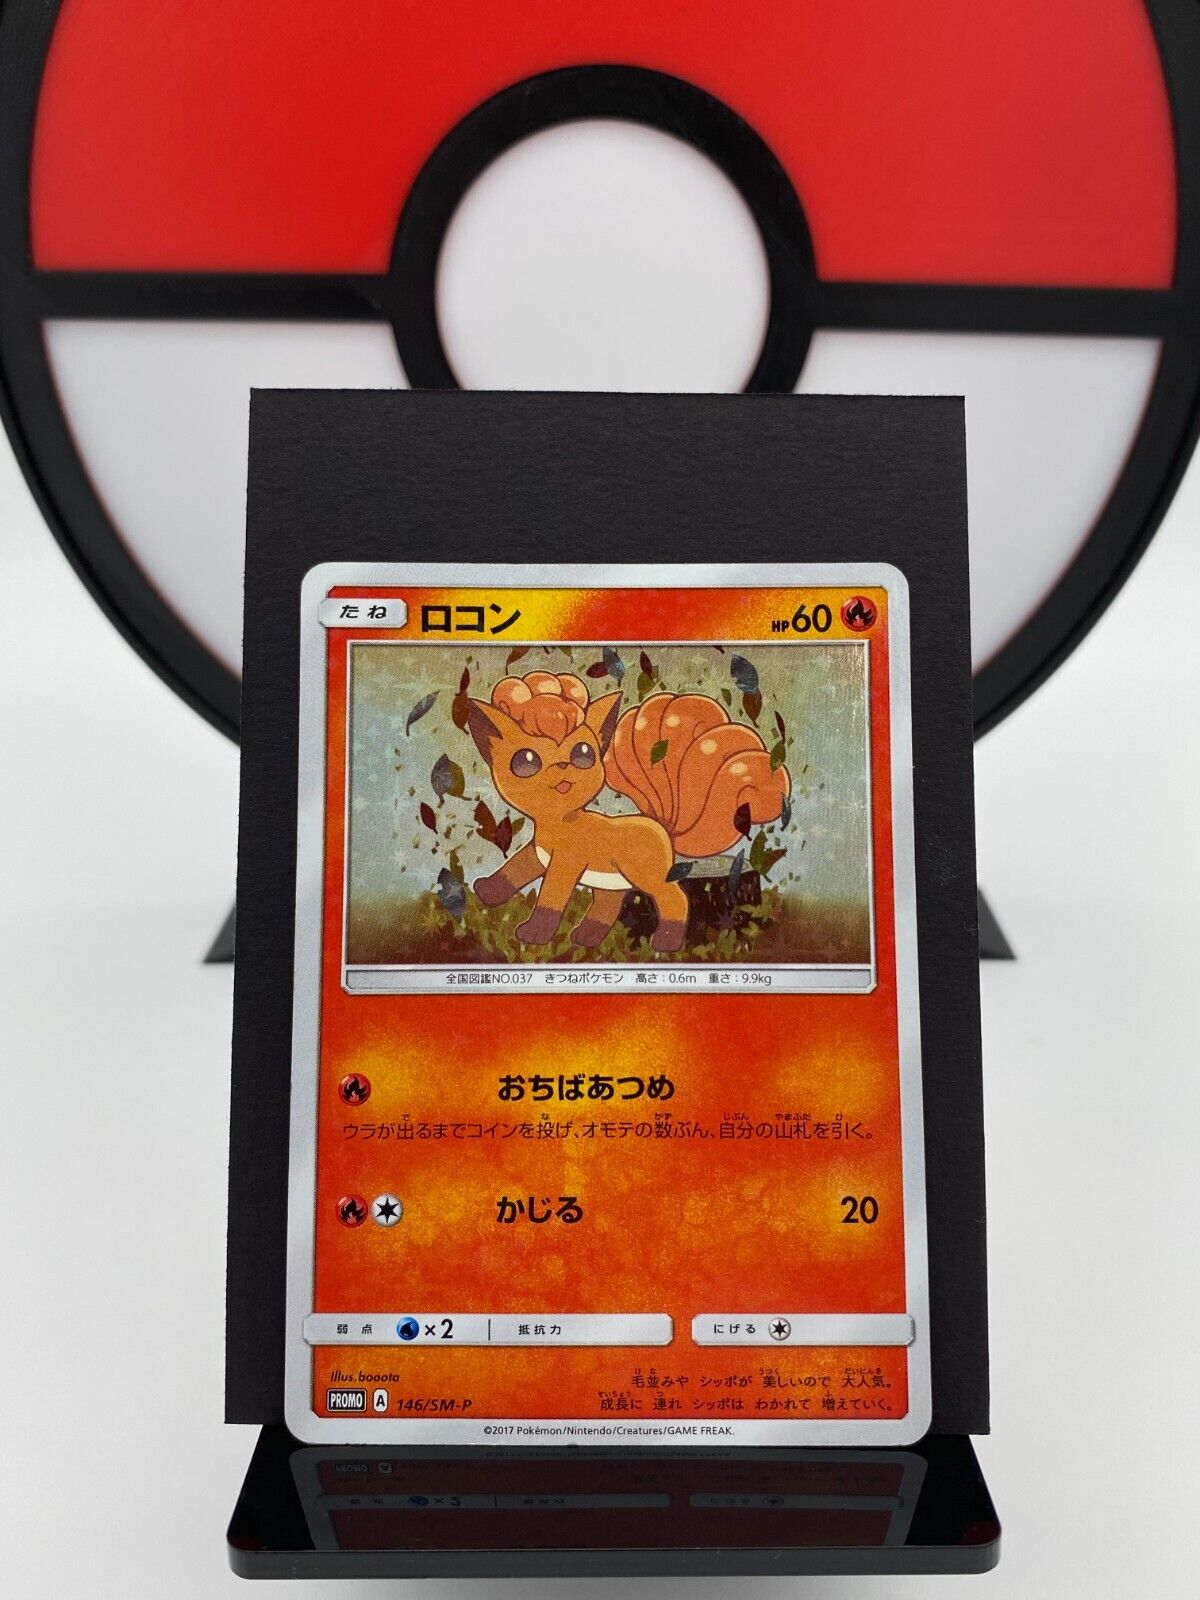 Vulpix 146/SM-P Crystal Season Special Box Promo Pokemon Card | Japanese | MP+